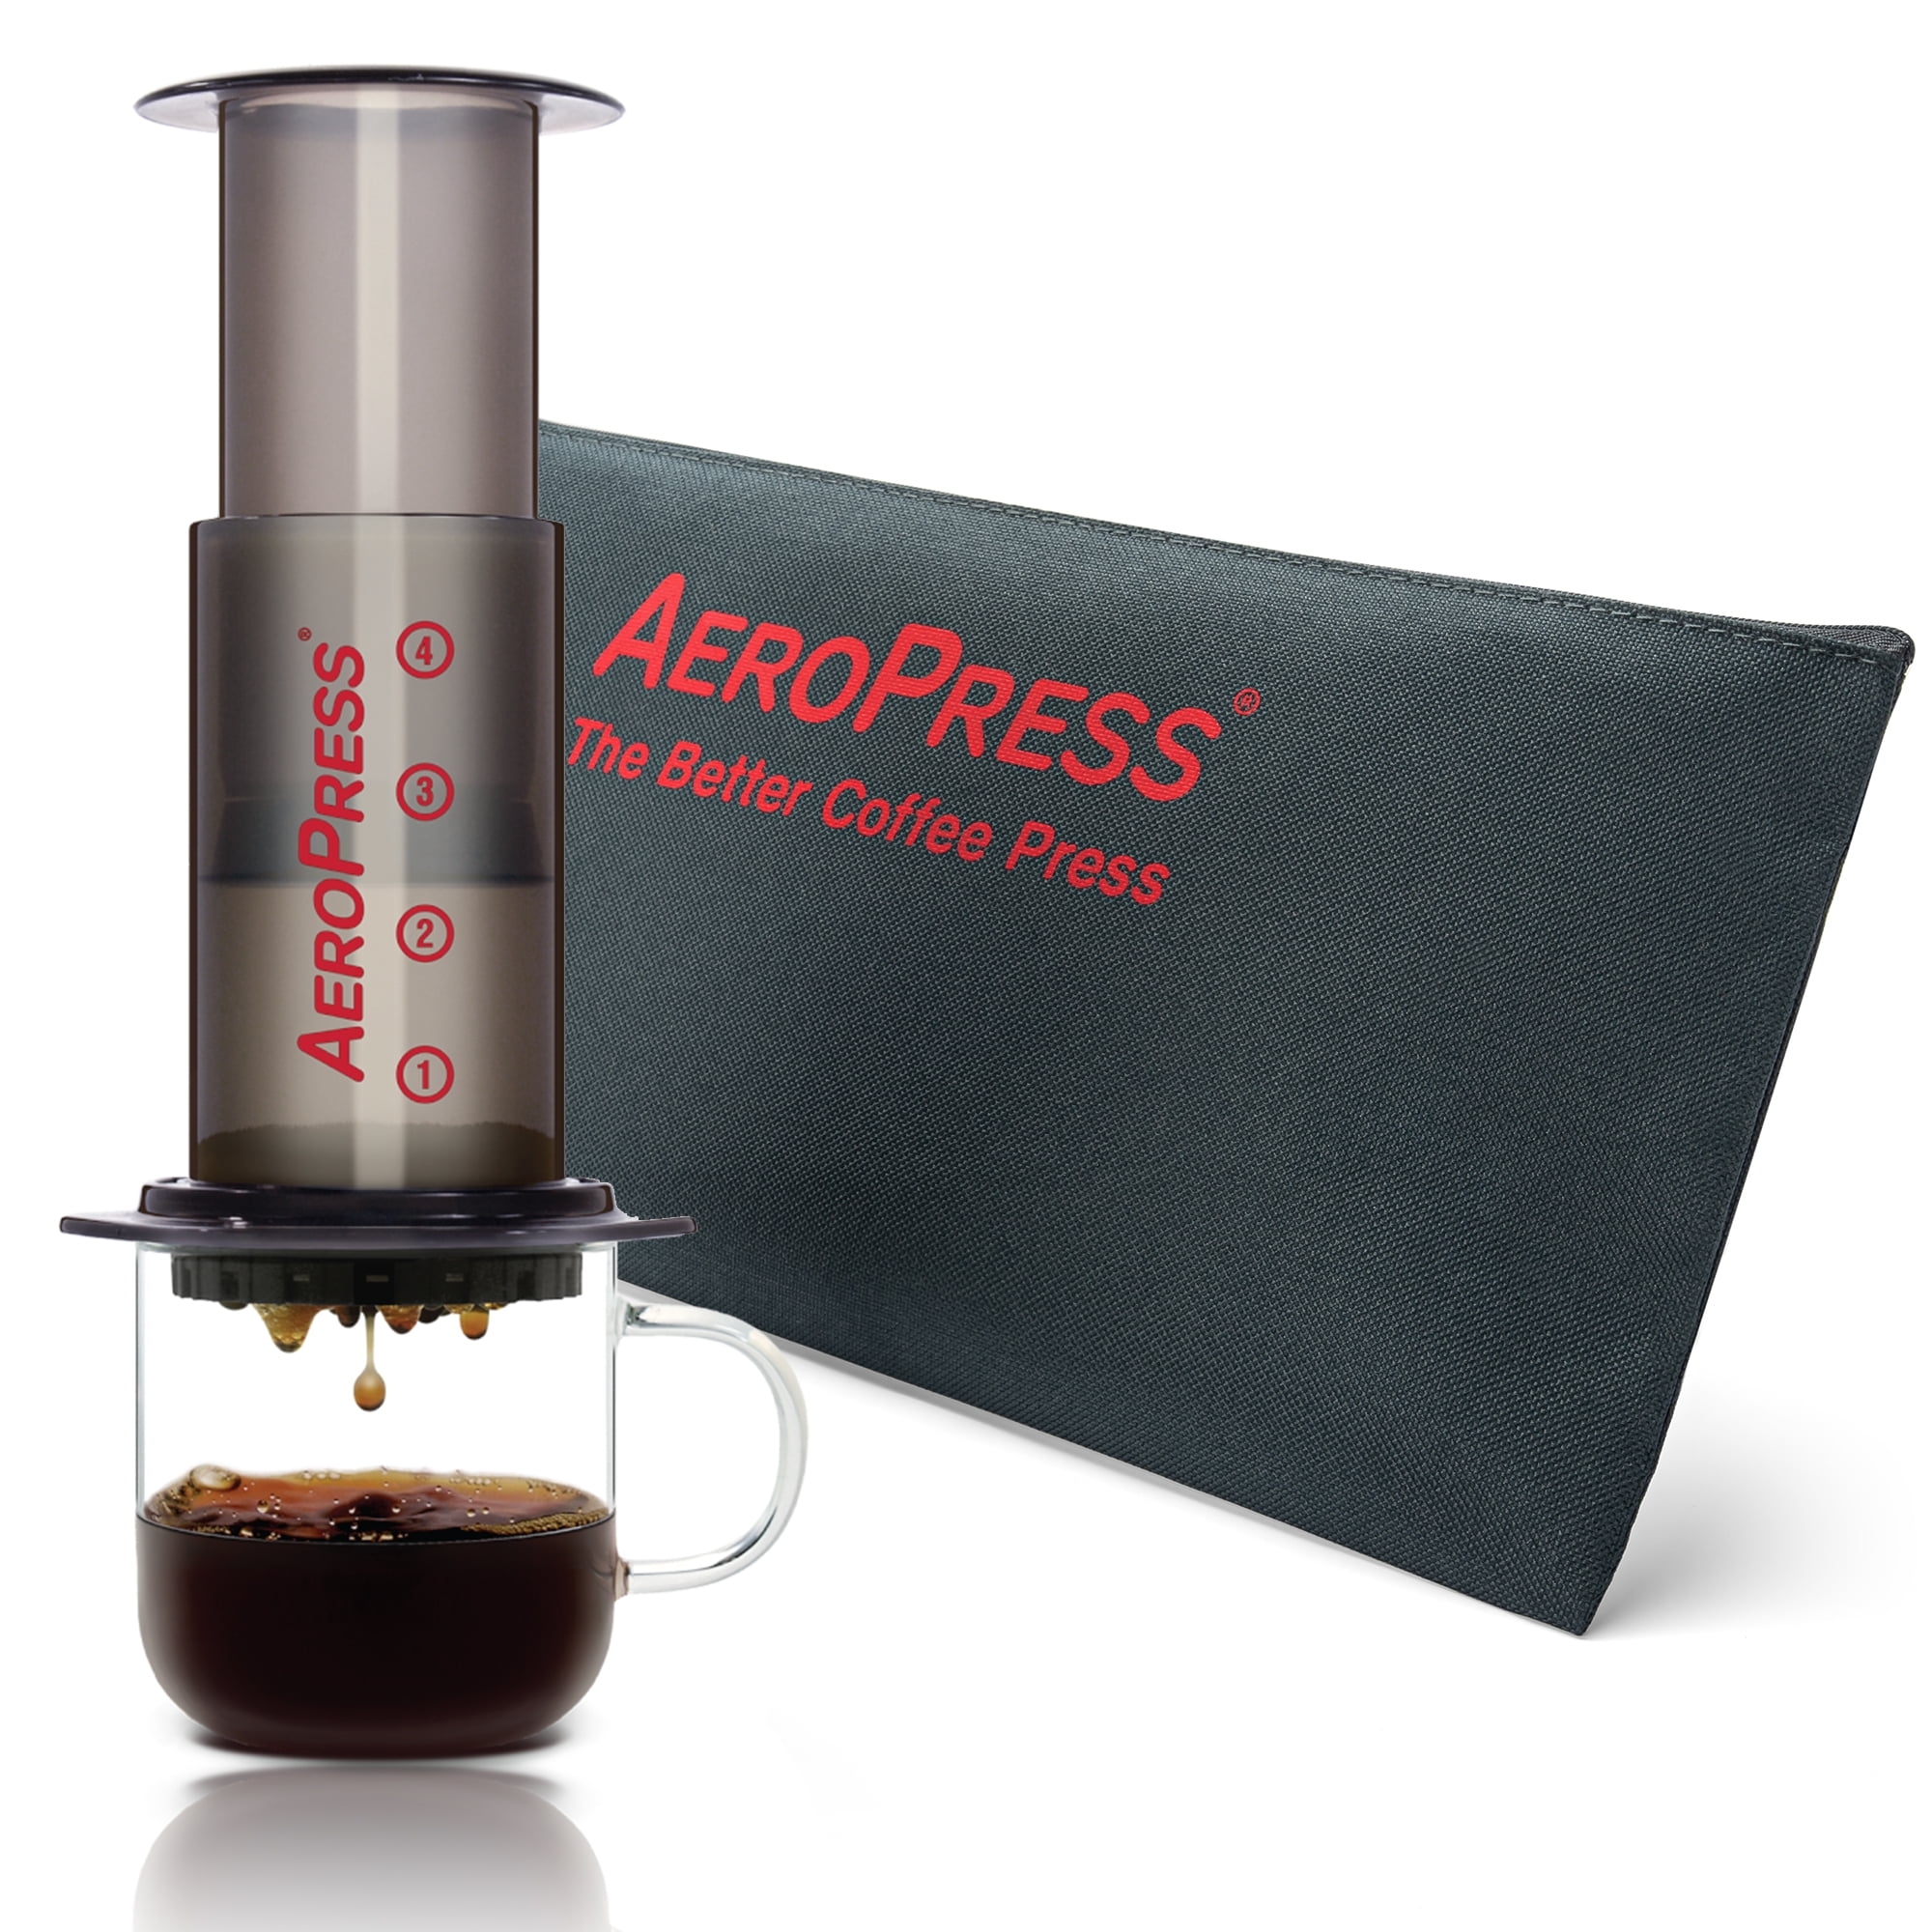 AeroPress Original Coffee Maker with Tote Bag $29